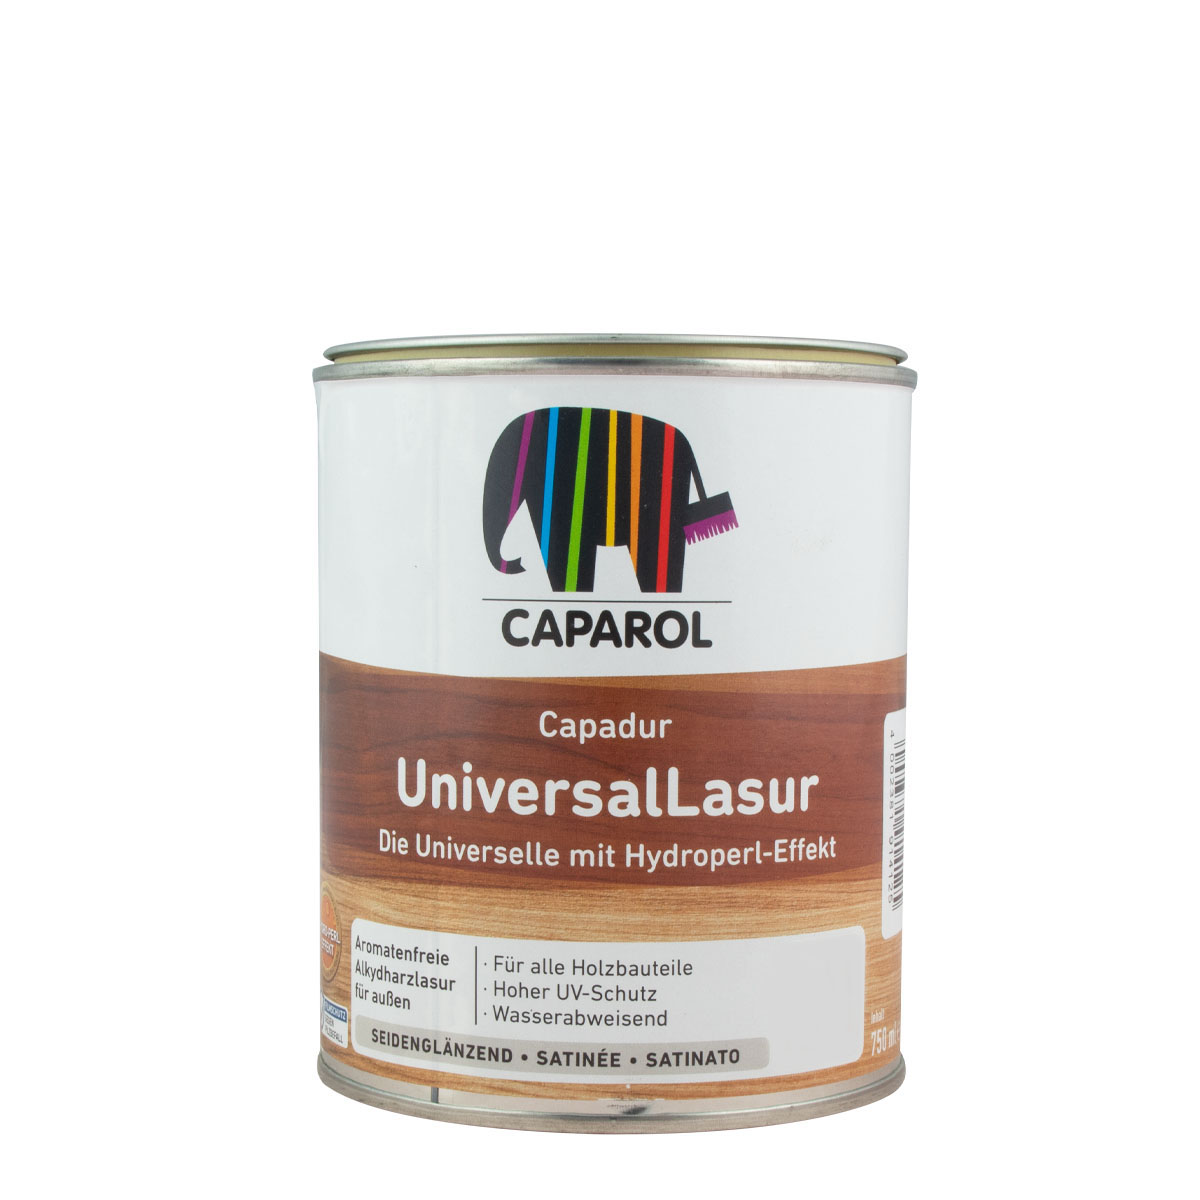 Caparol Capadur Universal Lasur 750ml, Teak